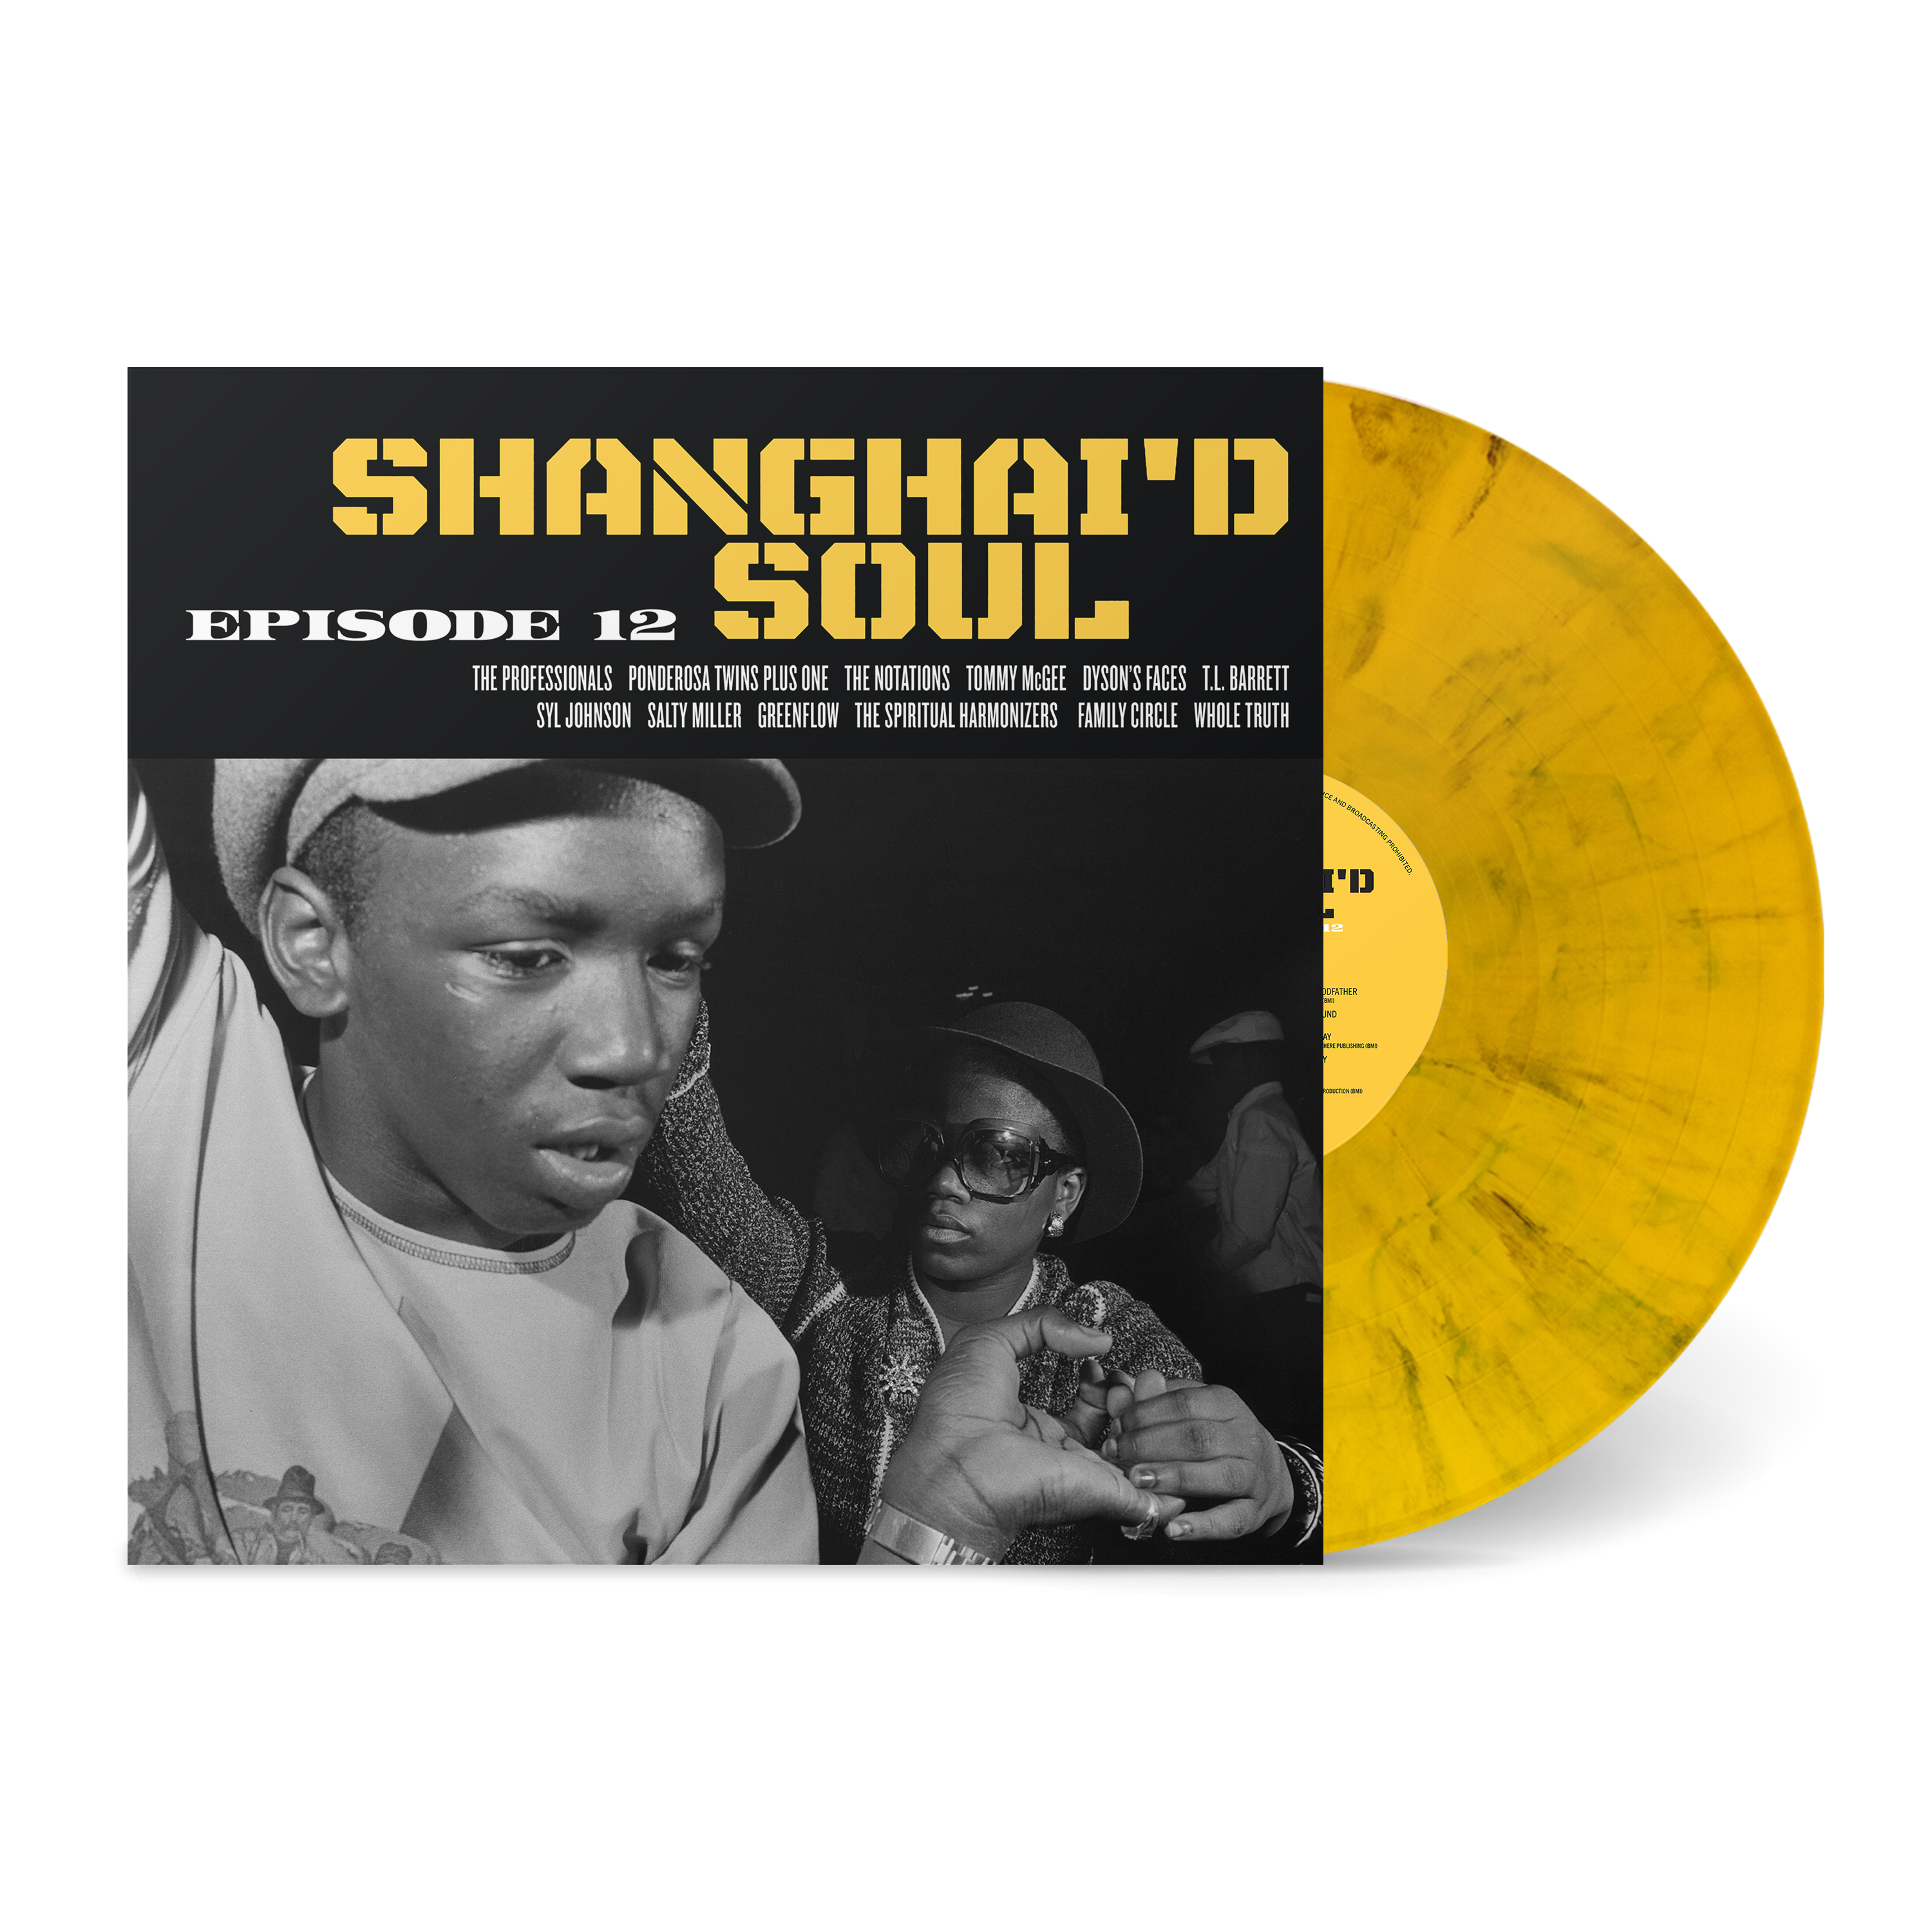 Various Artists - Shanghai'd Soul Episode 12: Limited Yellow & Black Splatter Vinyl LP